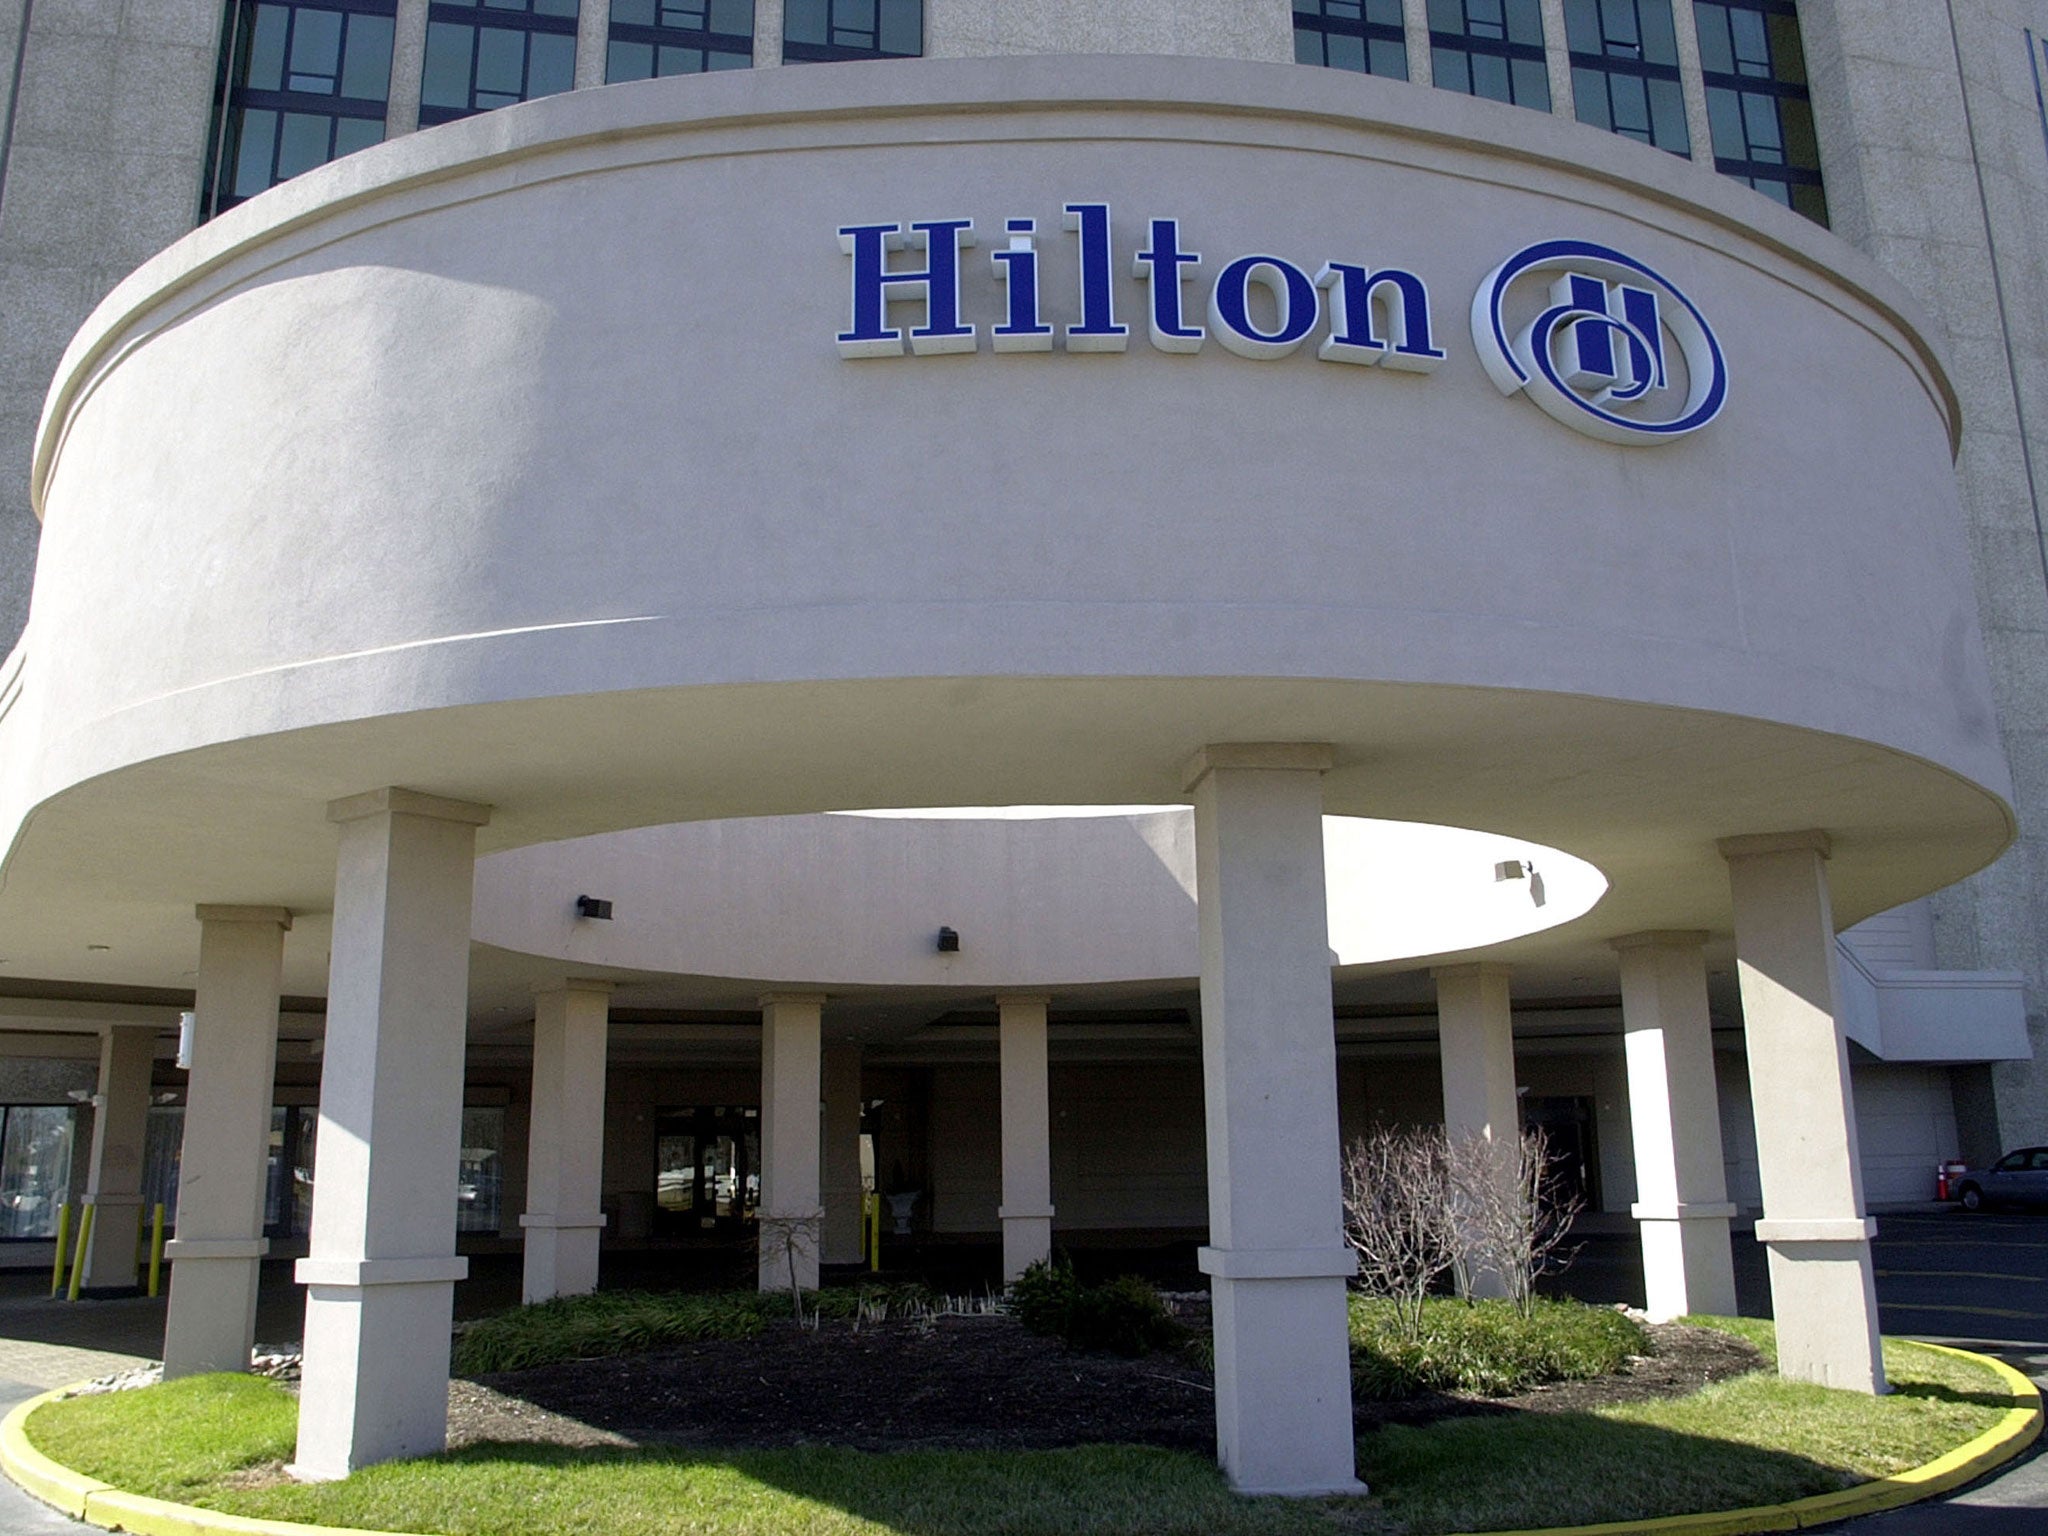 Hotel giant Hilton Worldwide has raised $2.34 billion (£1.42 billion) through an initial public offering